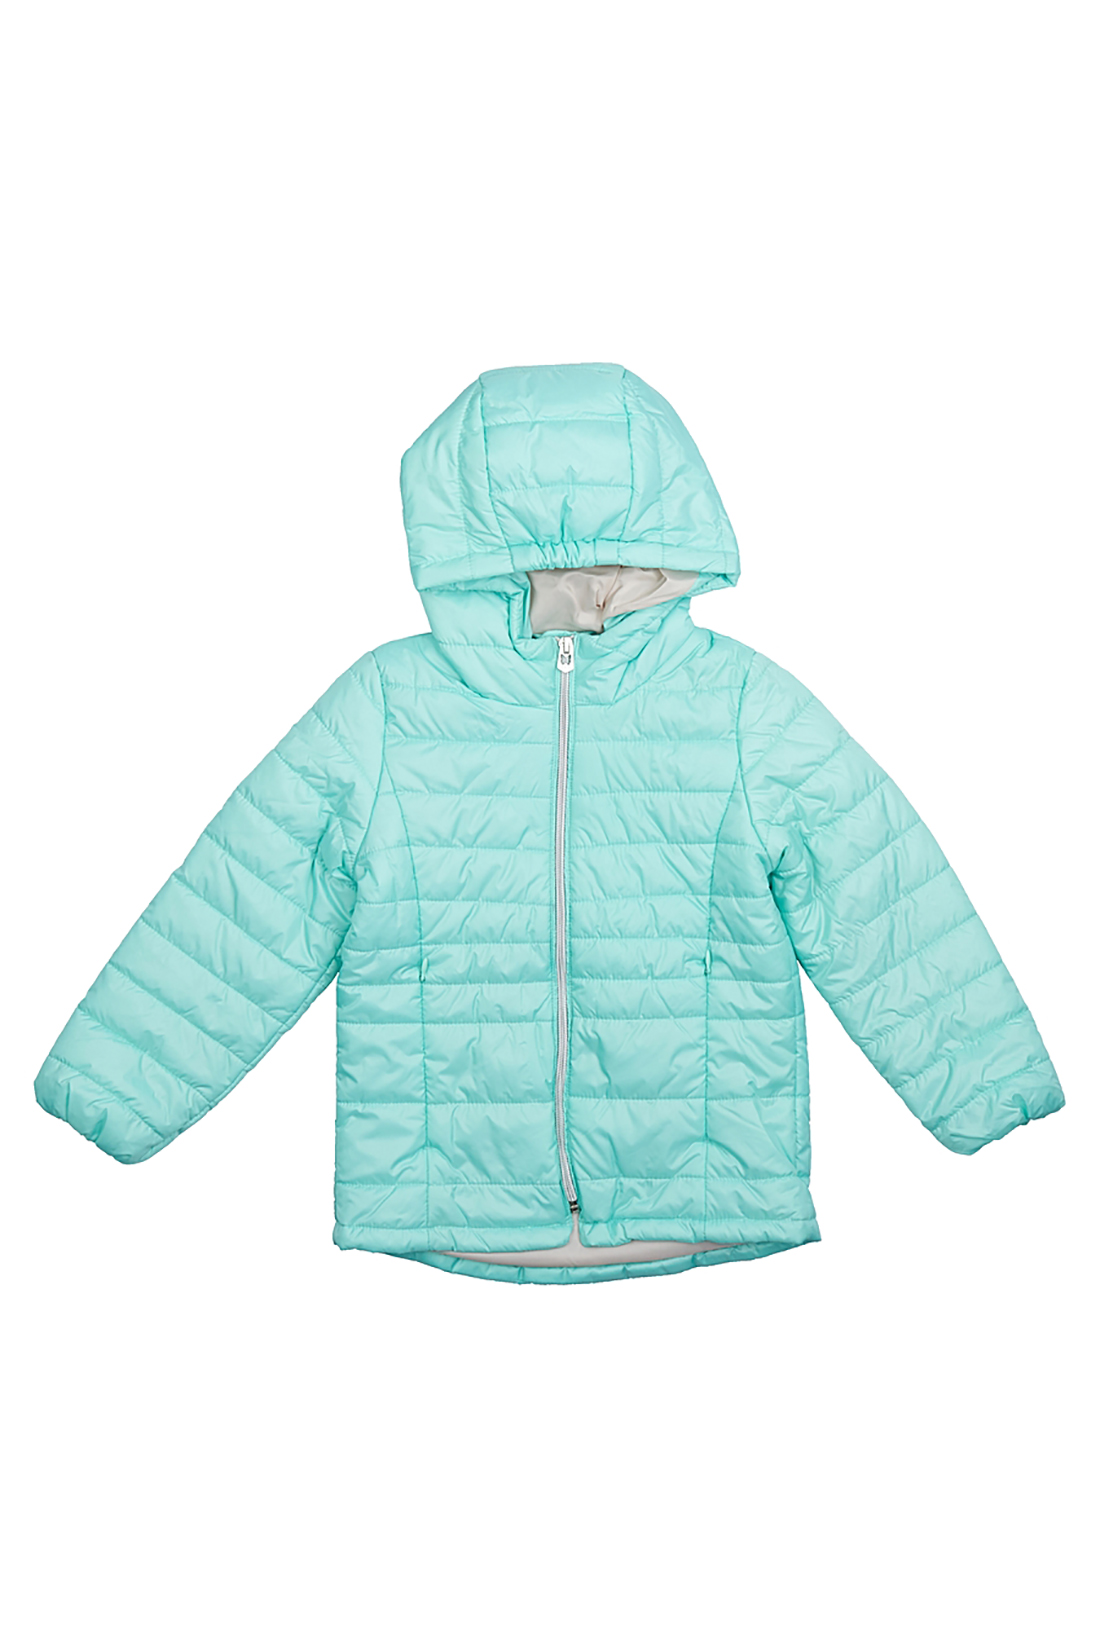 Куртка для девочки (арт. baon BK038001), размер 98-104, цвет зеленый Куртка для девочки (арт. baon BK038001) - фото 5